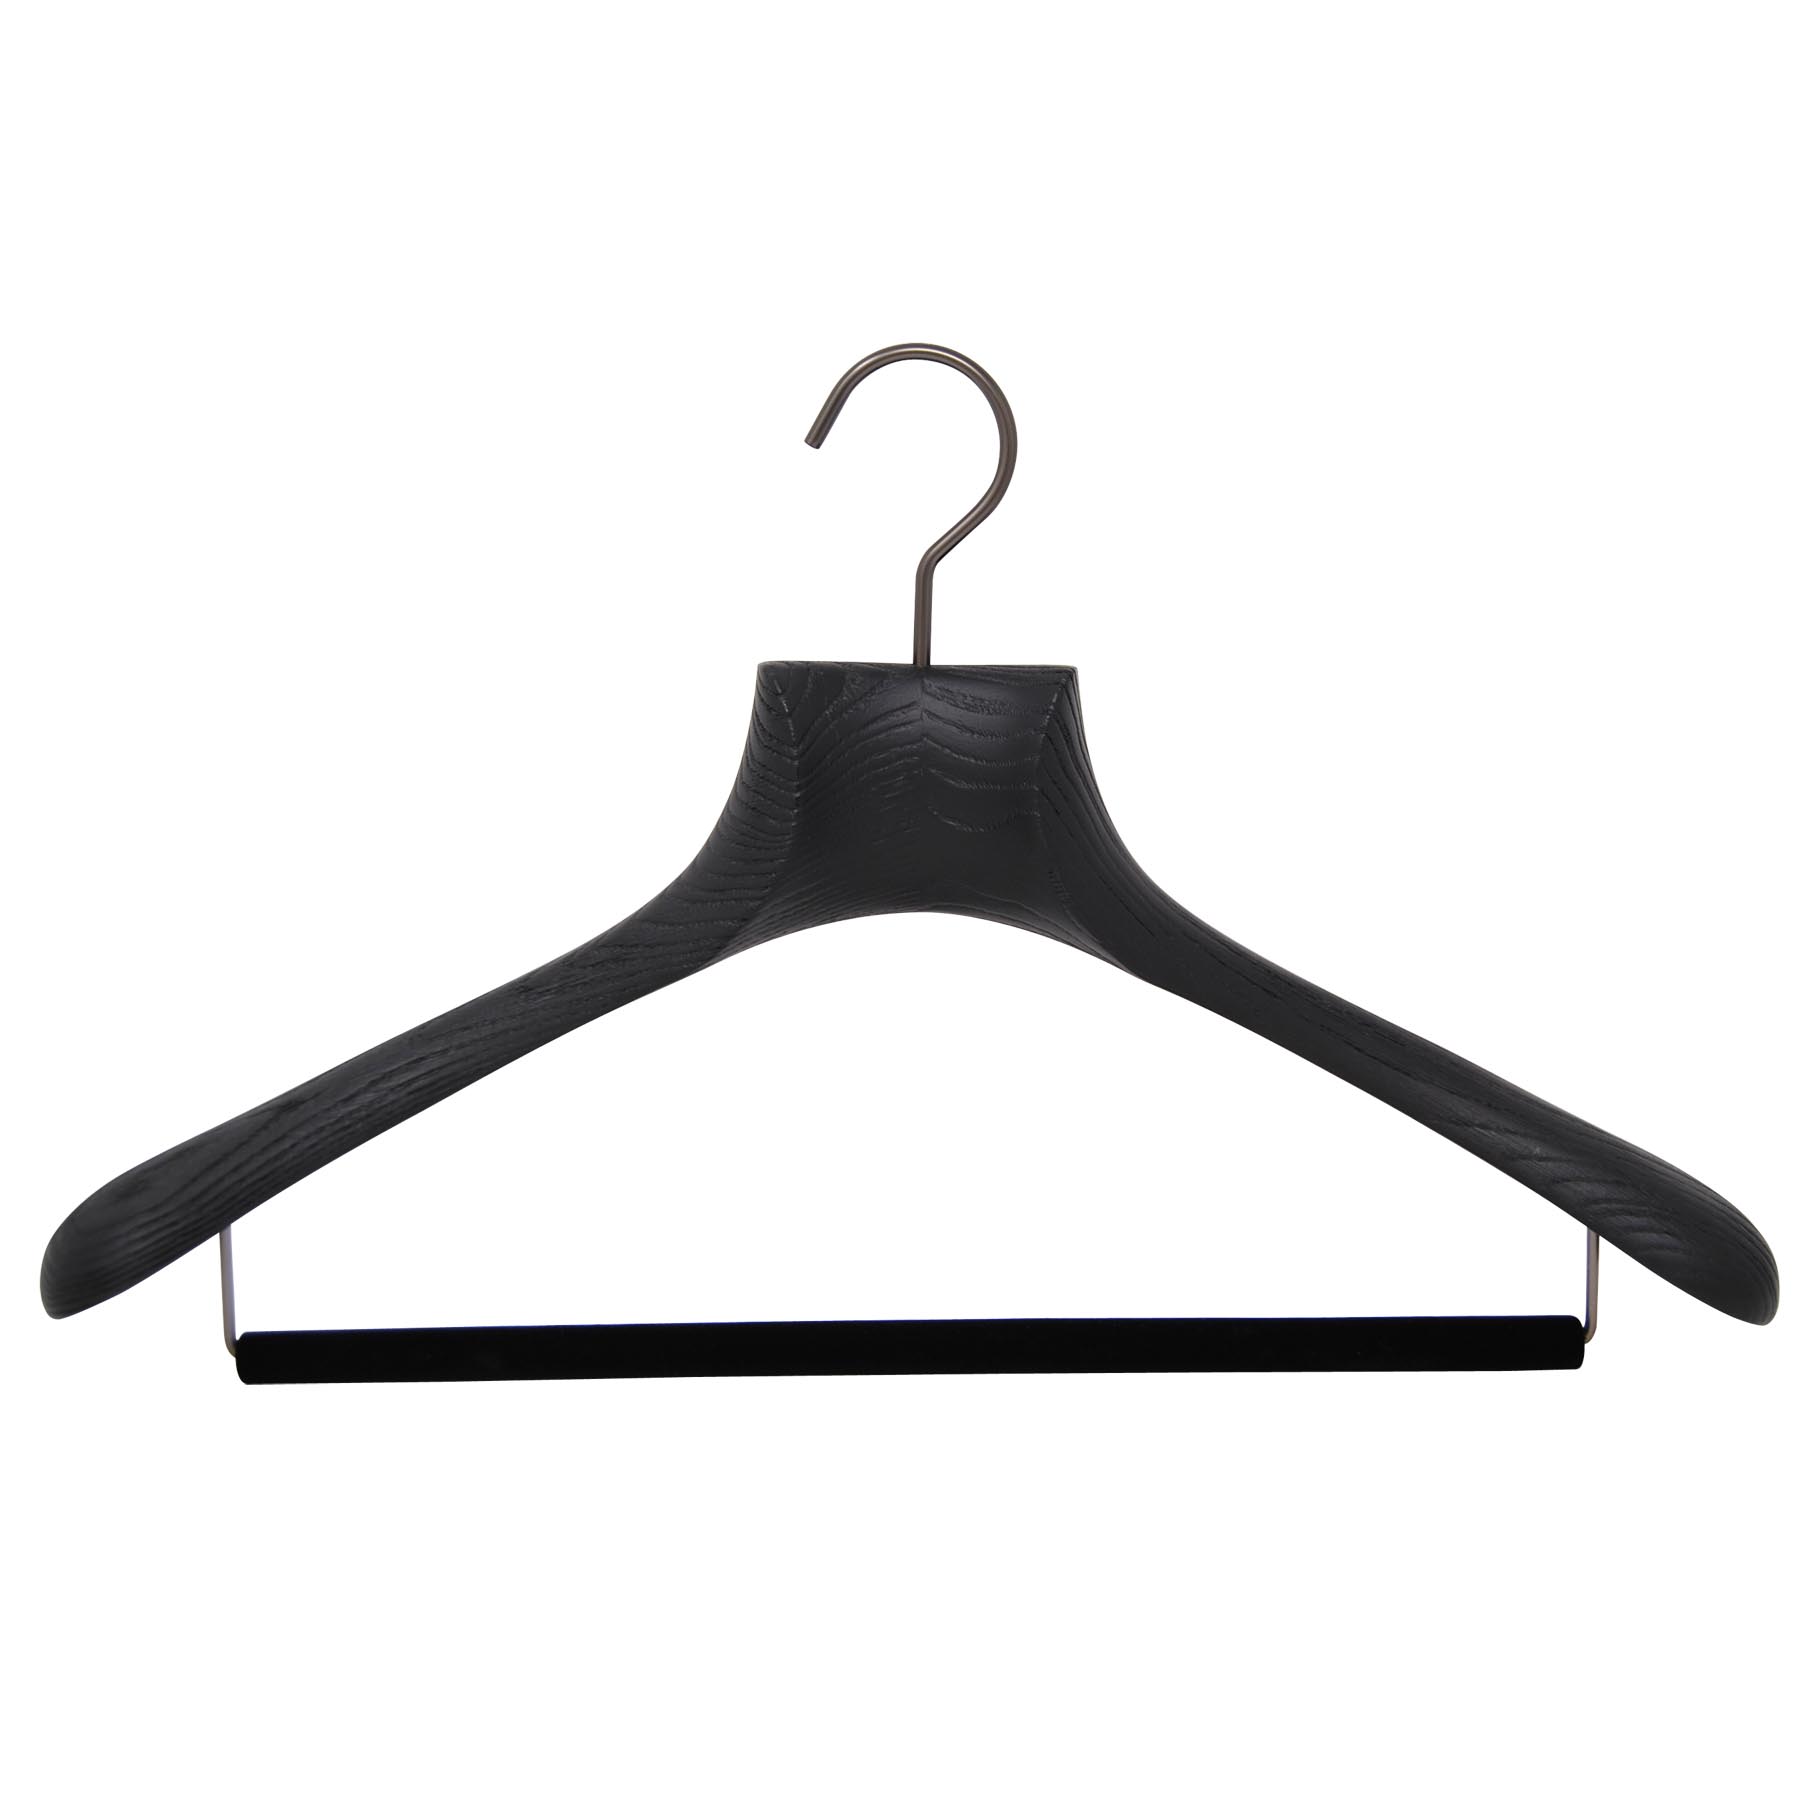 6 luxury suit hangers with non-slip bar